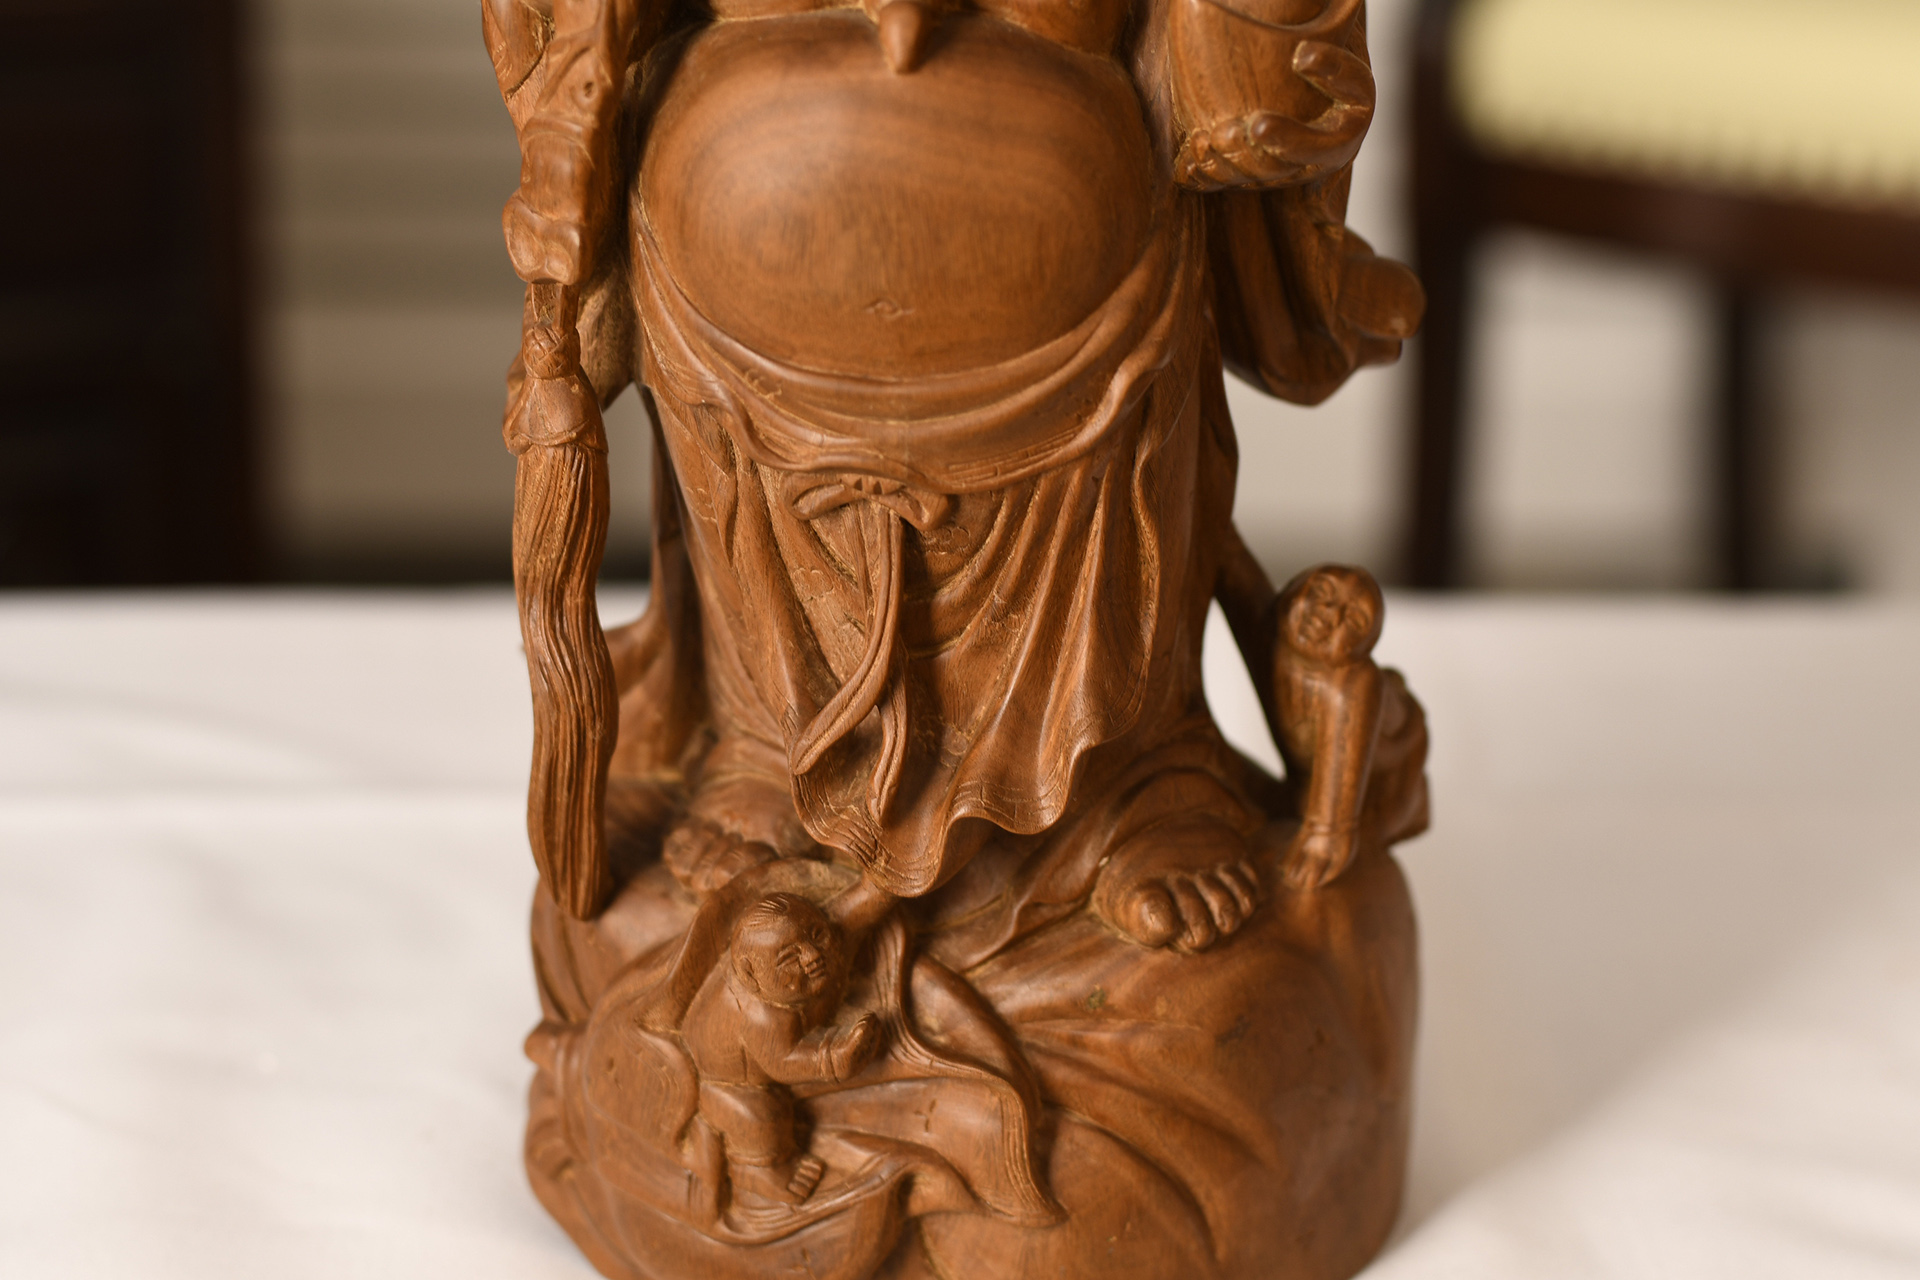 Buddha Wood Carving